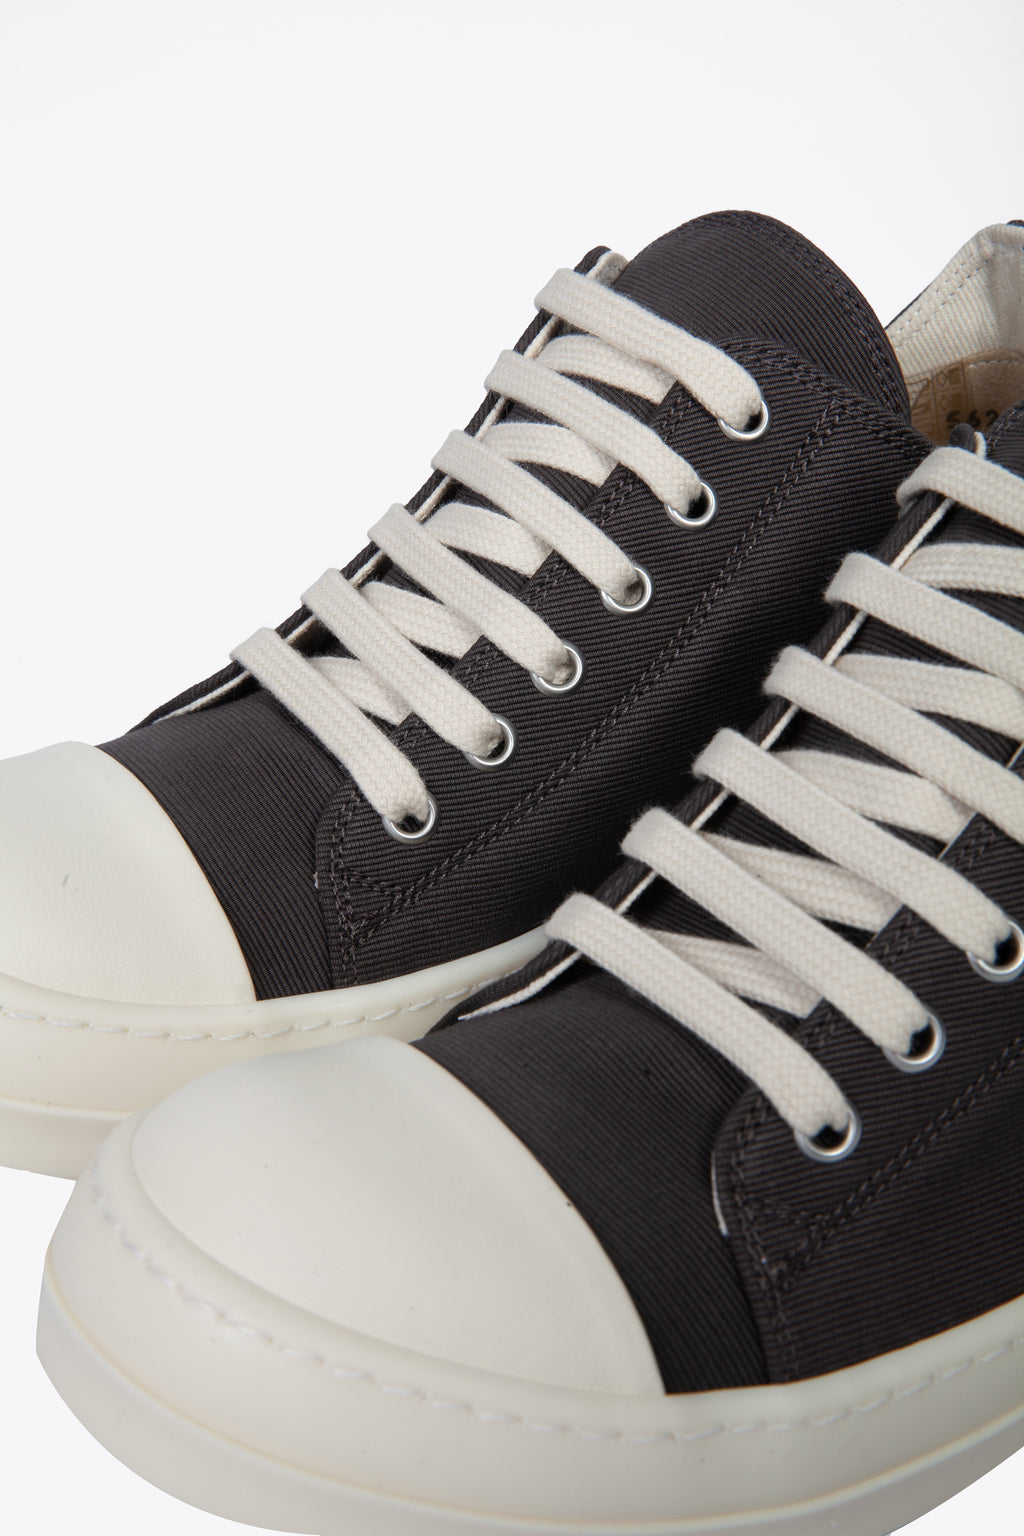 alt-image__Charcoal-grey-cotton-lace-up-low-sneaker---Low-sneaks